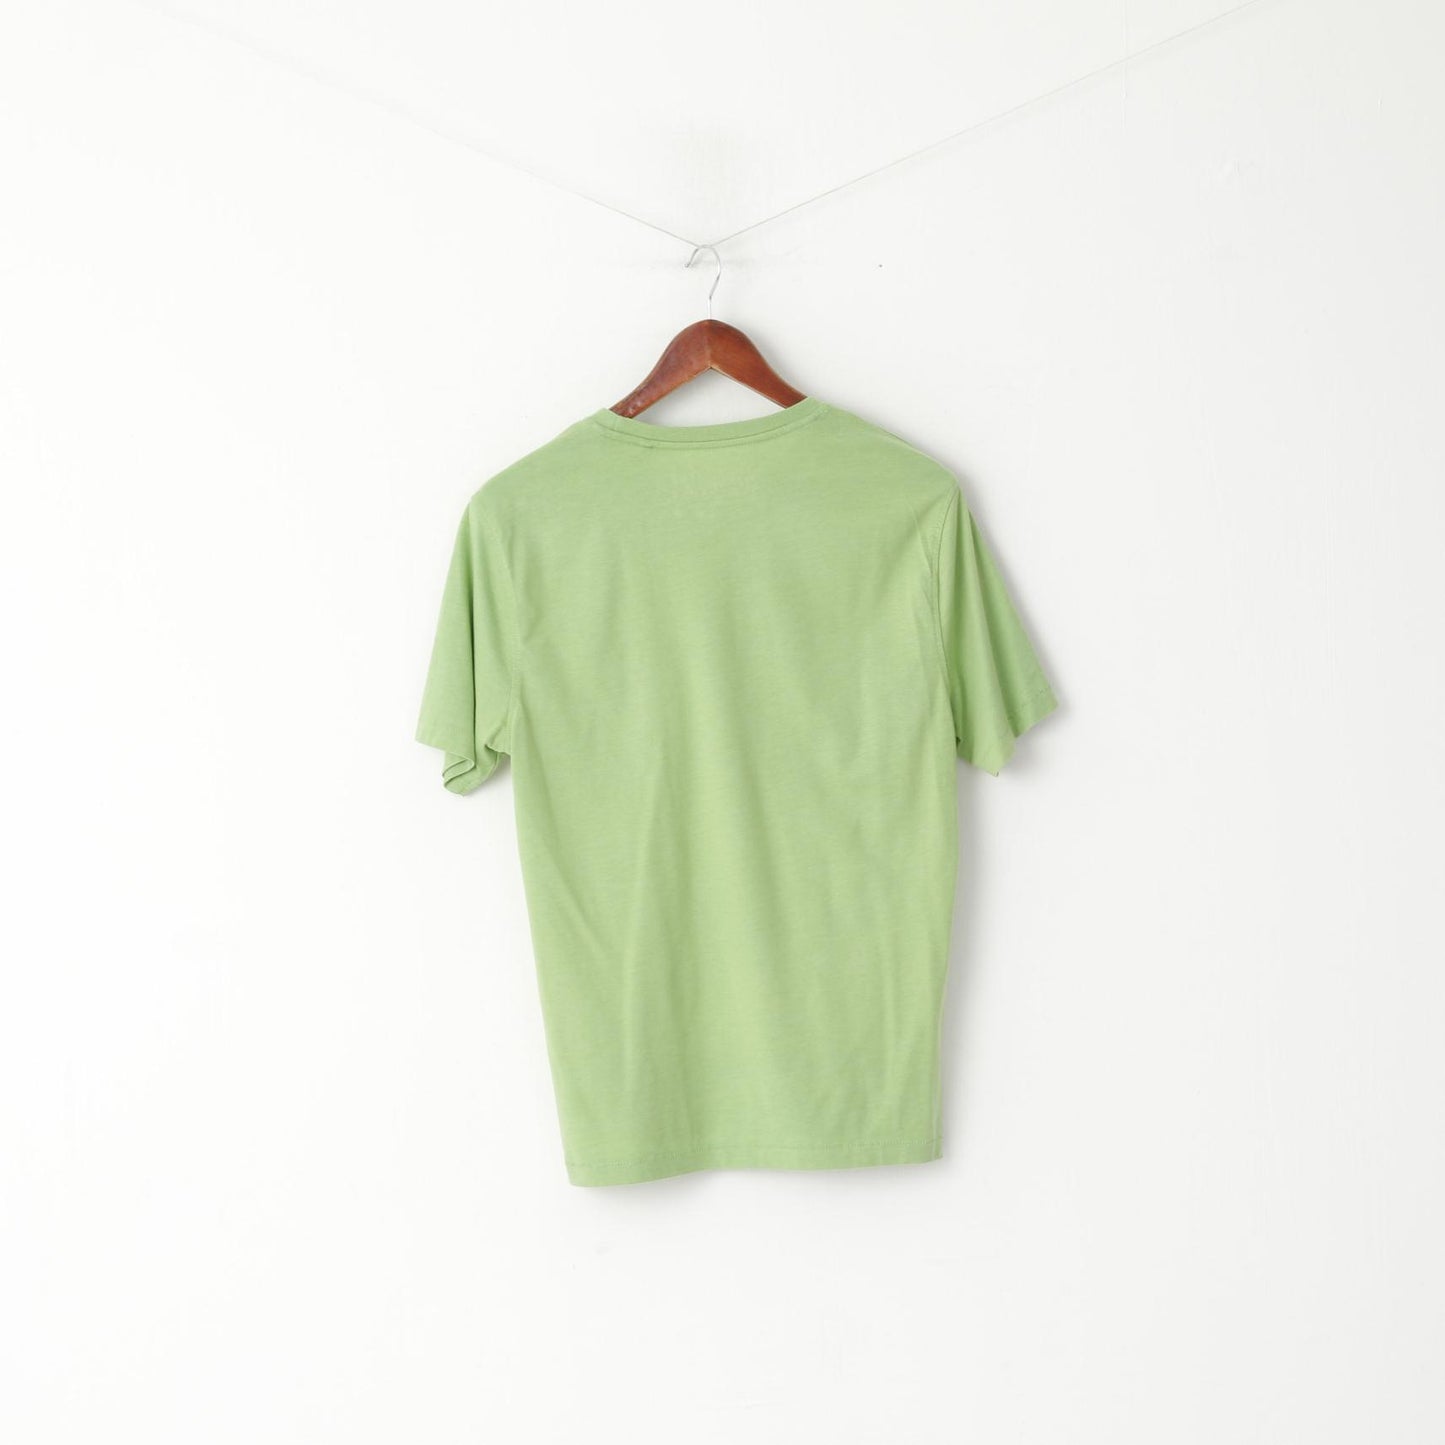 George Men S T- Shirt Green Coca Cola Graphic Cotton Crew Neck Top